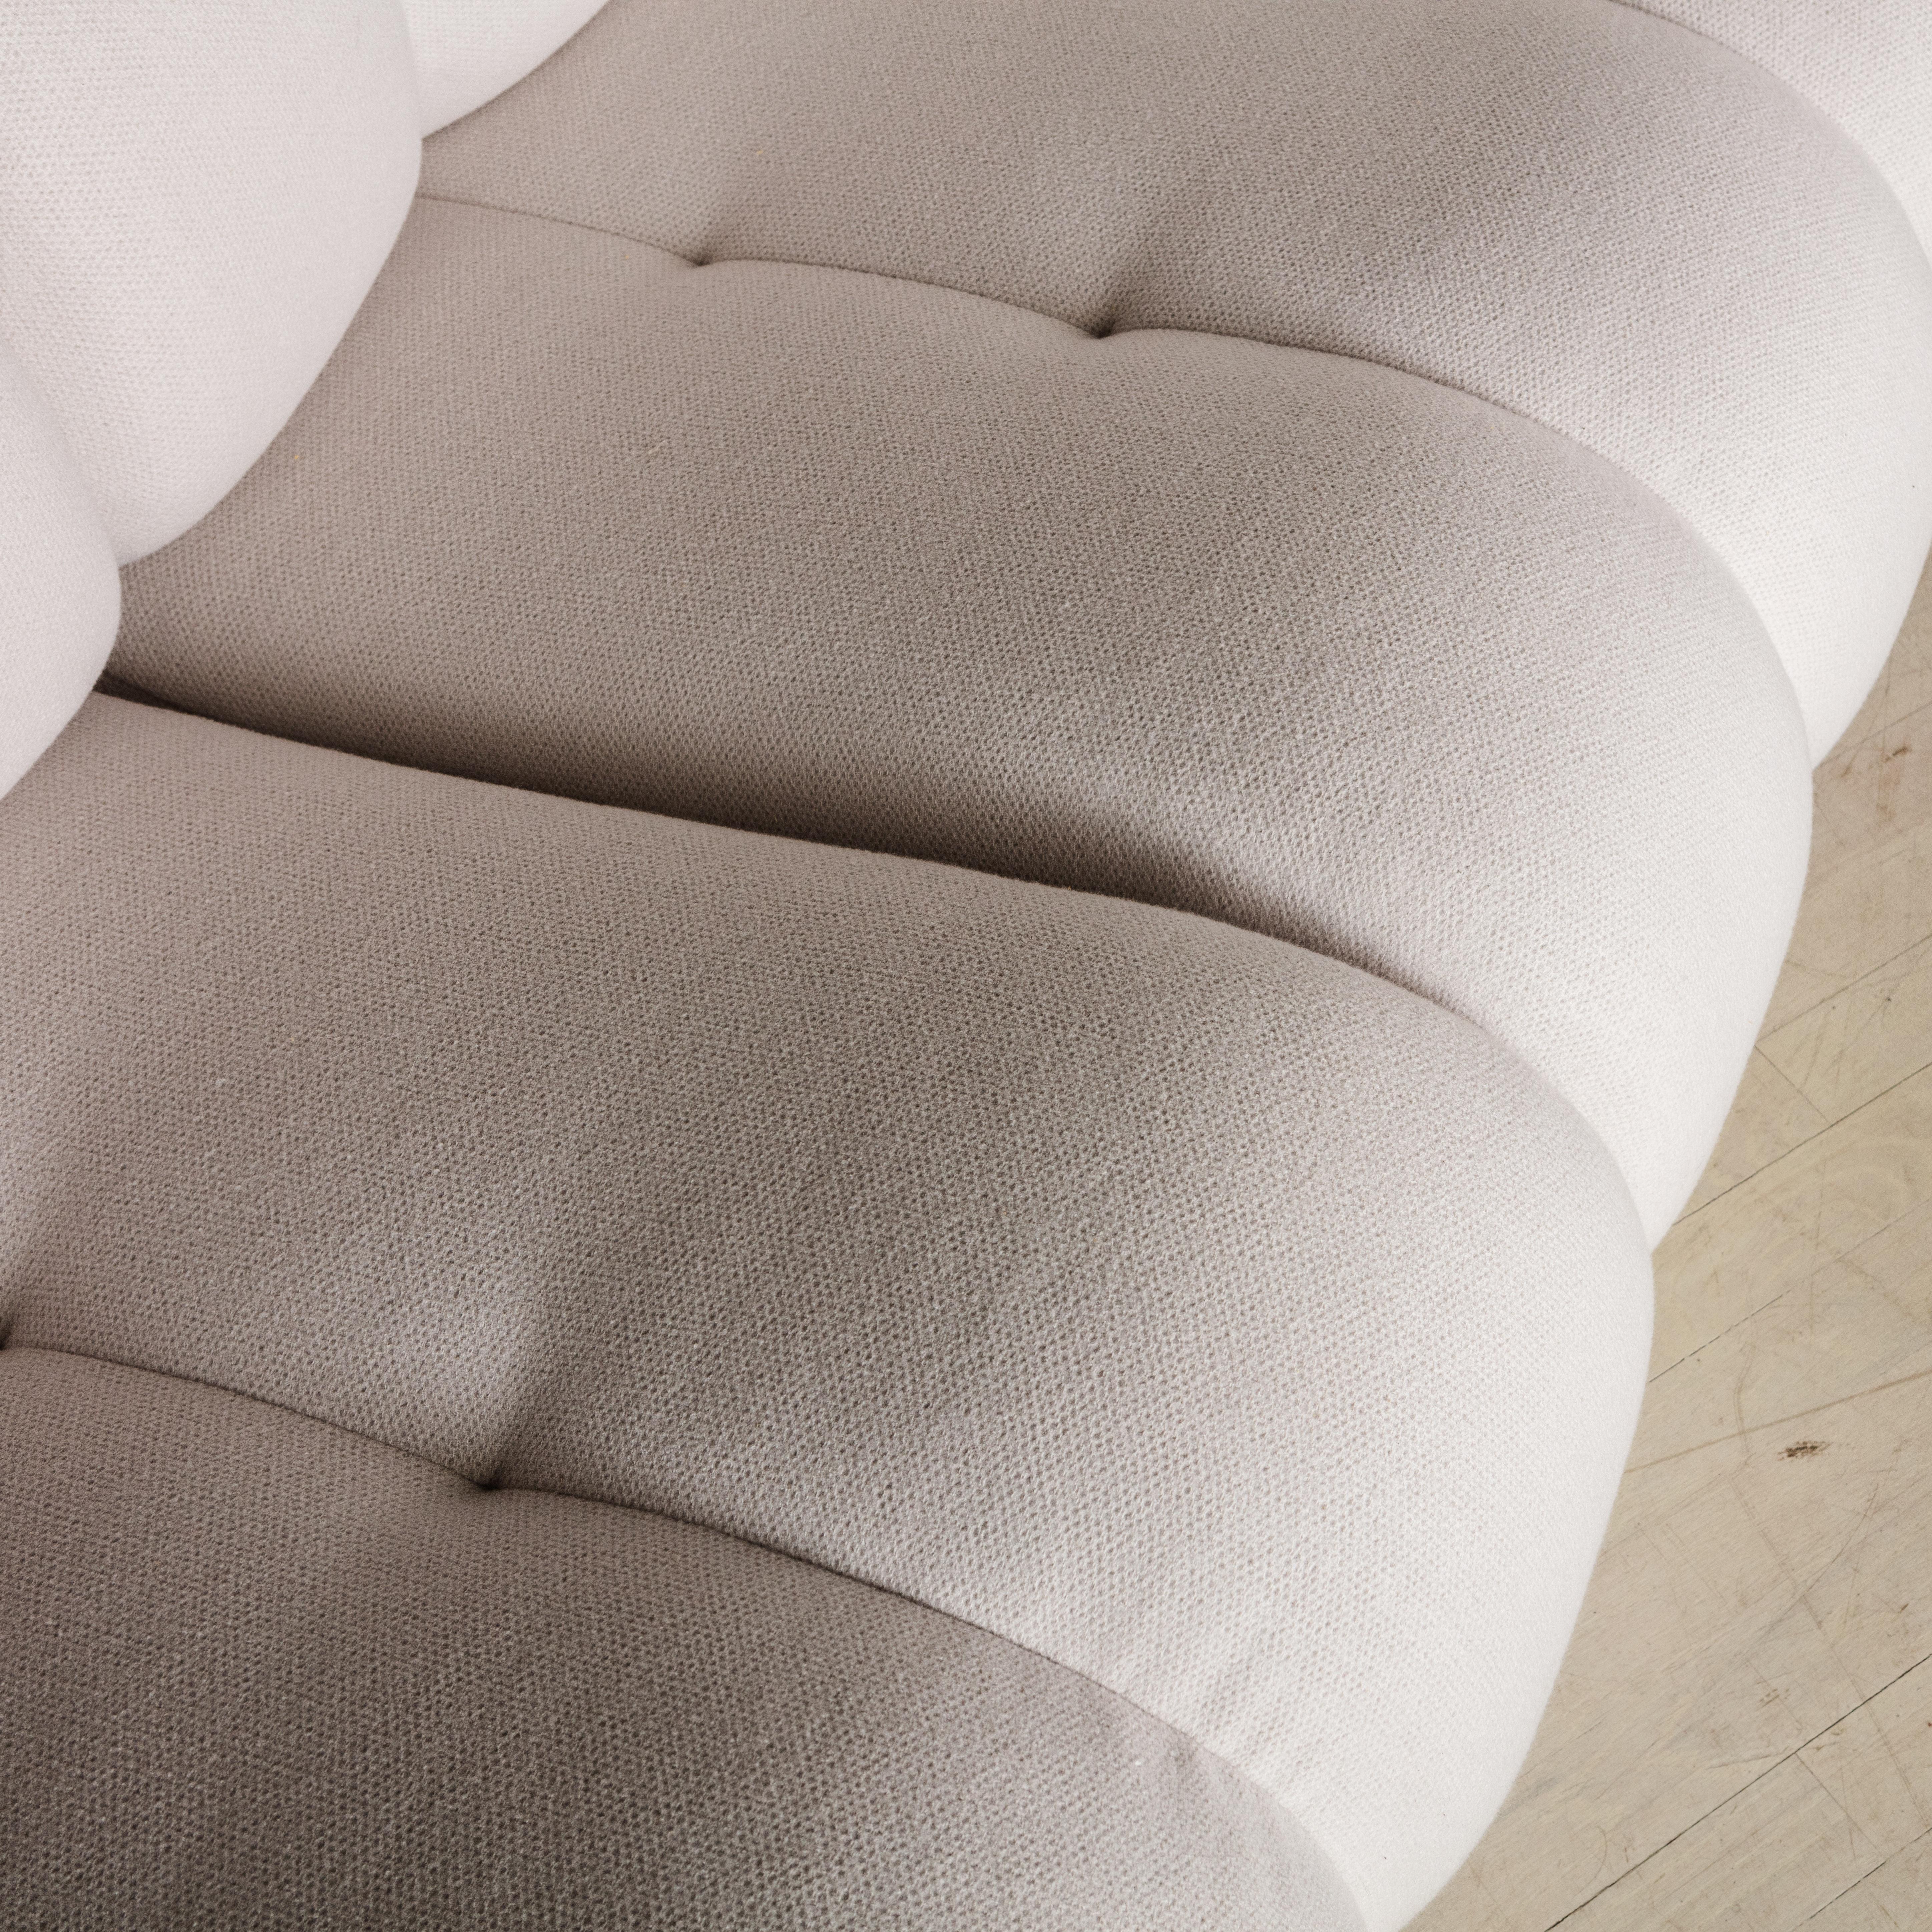 Channeled Sofa by Giuseppe Munari for Munari in new Cashmere Wool 1